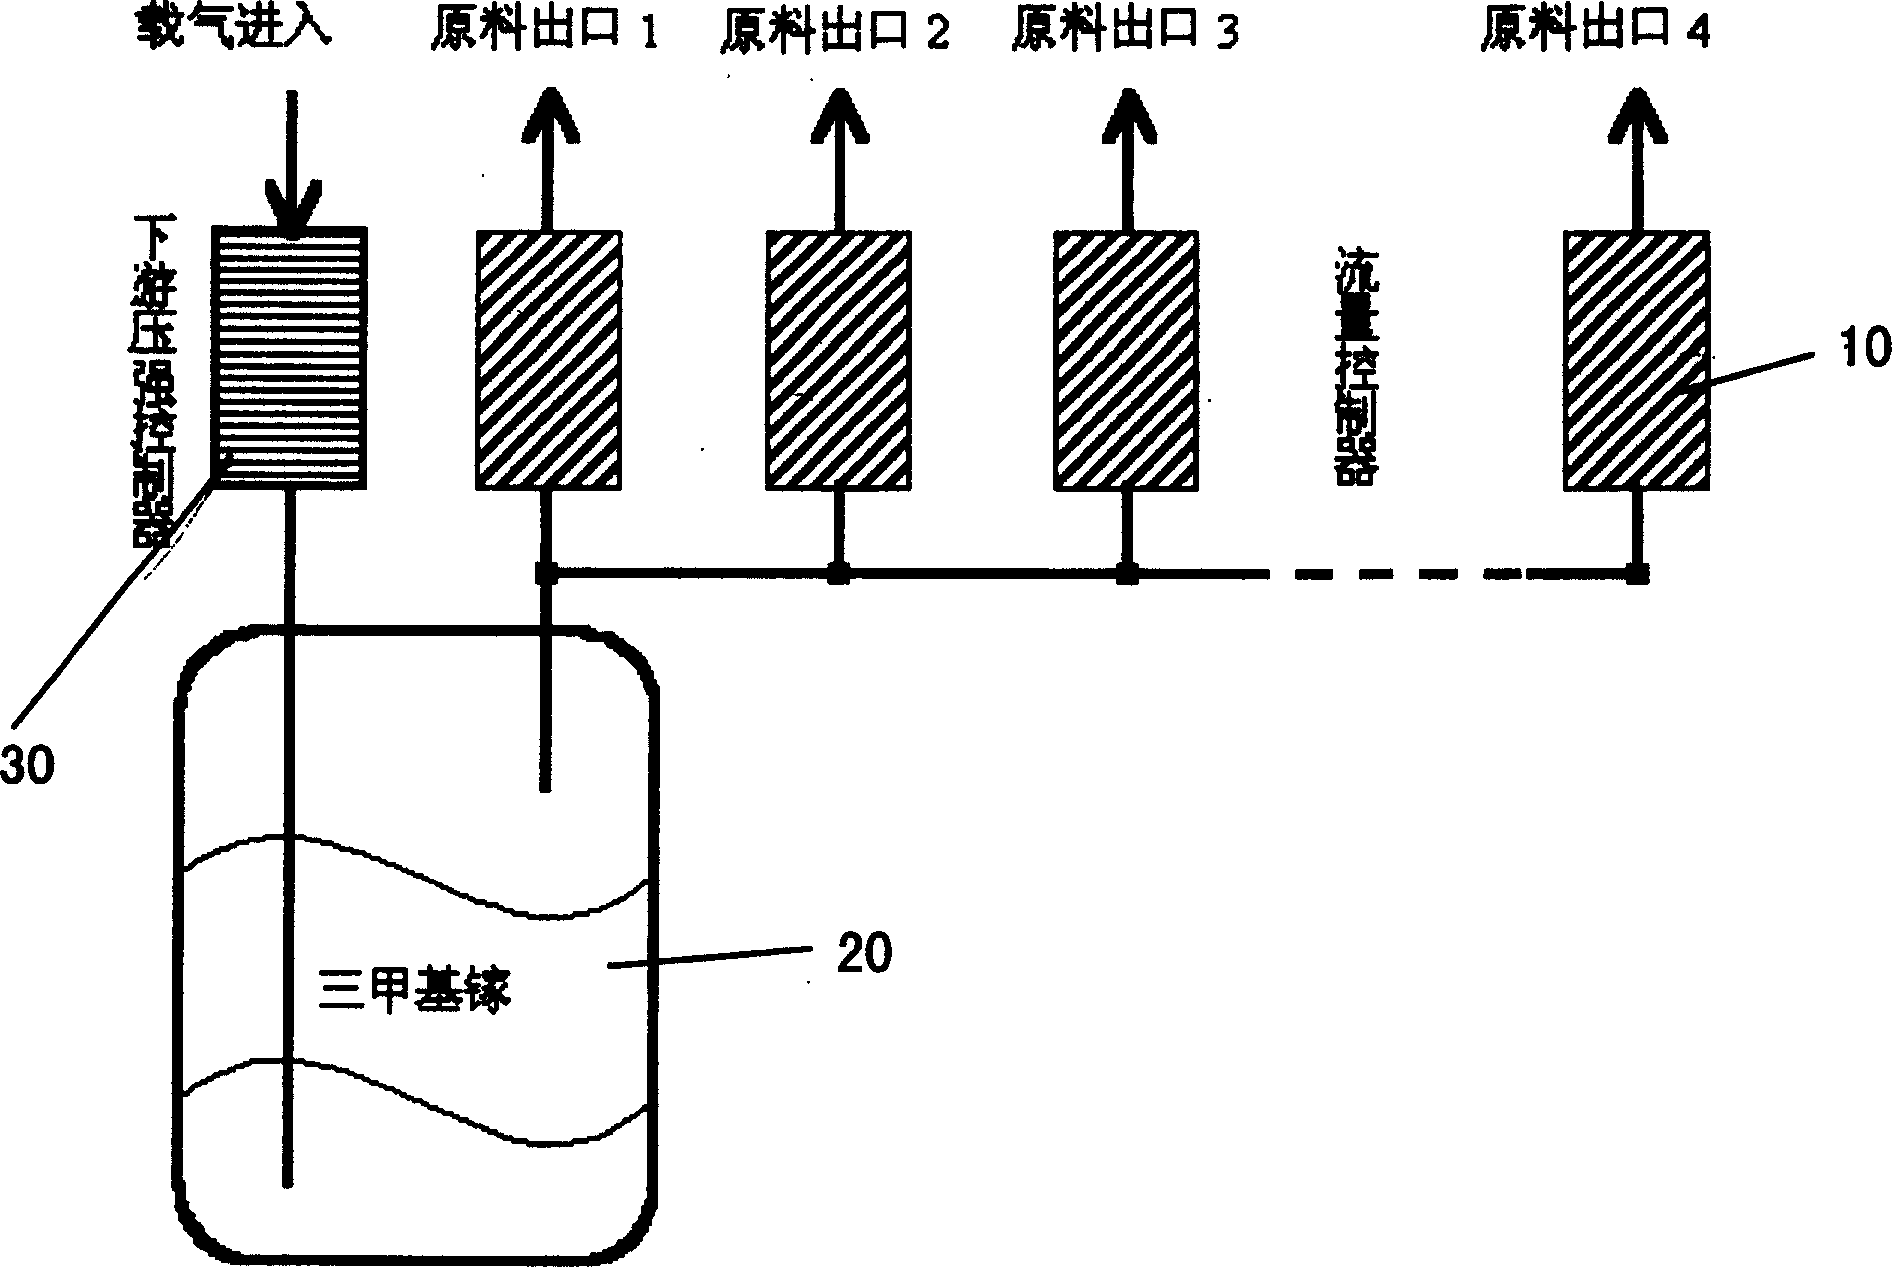 Chemical raw material dispensing system